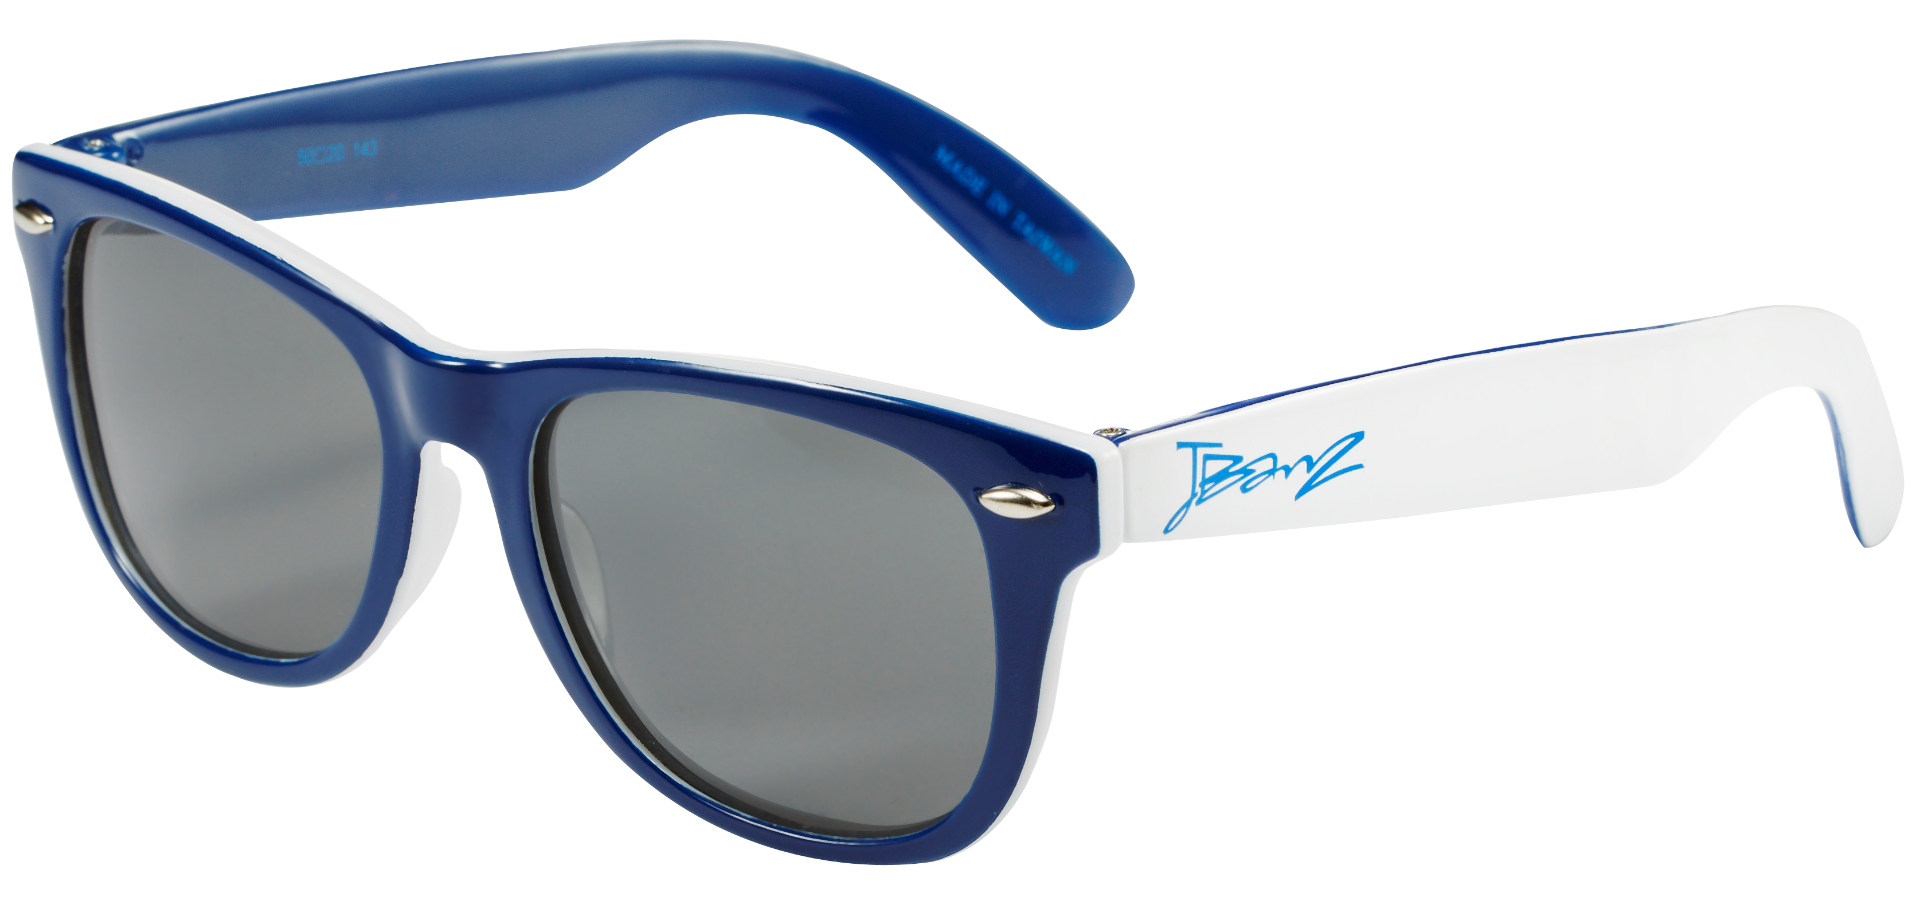 Banz - UV Protective Sunglasses for kids - Dual - Navy/White